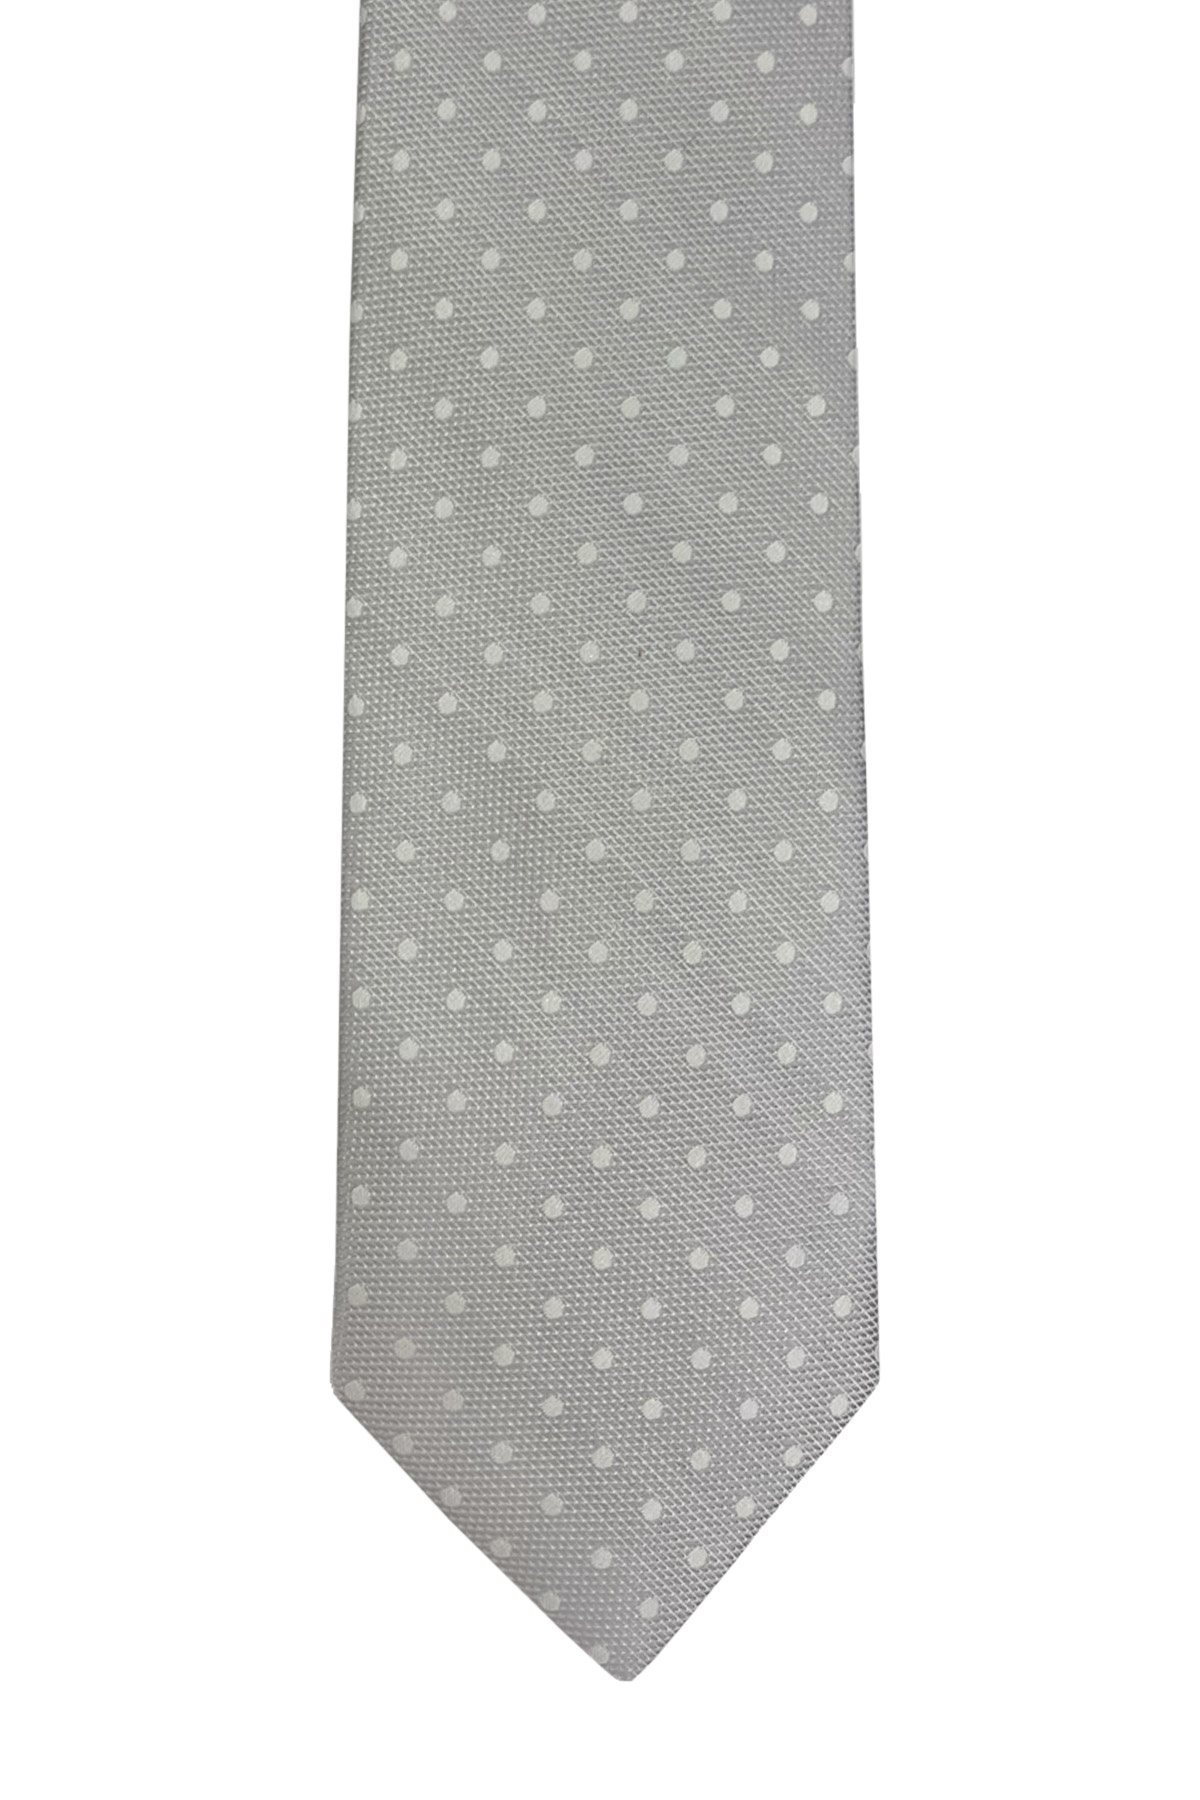 Cravatta uomo grigio chiaro 9cm fantasia pois da cerimonia elegante pura seta